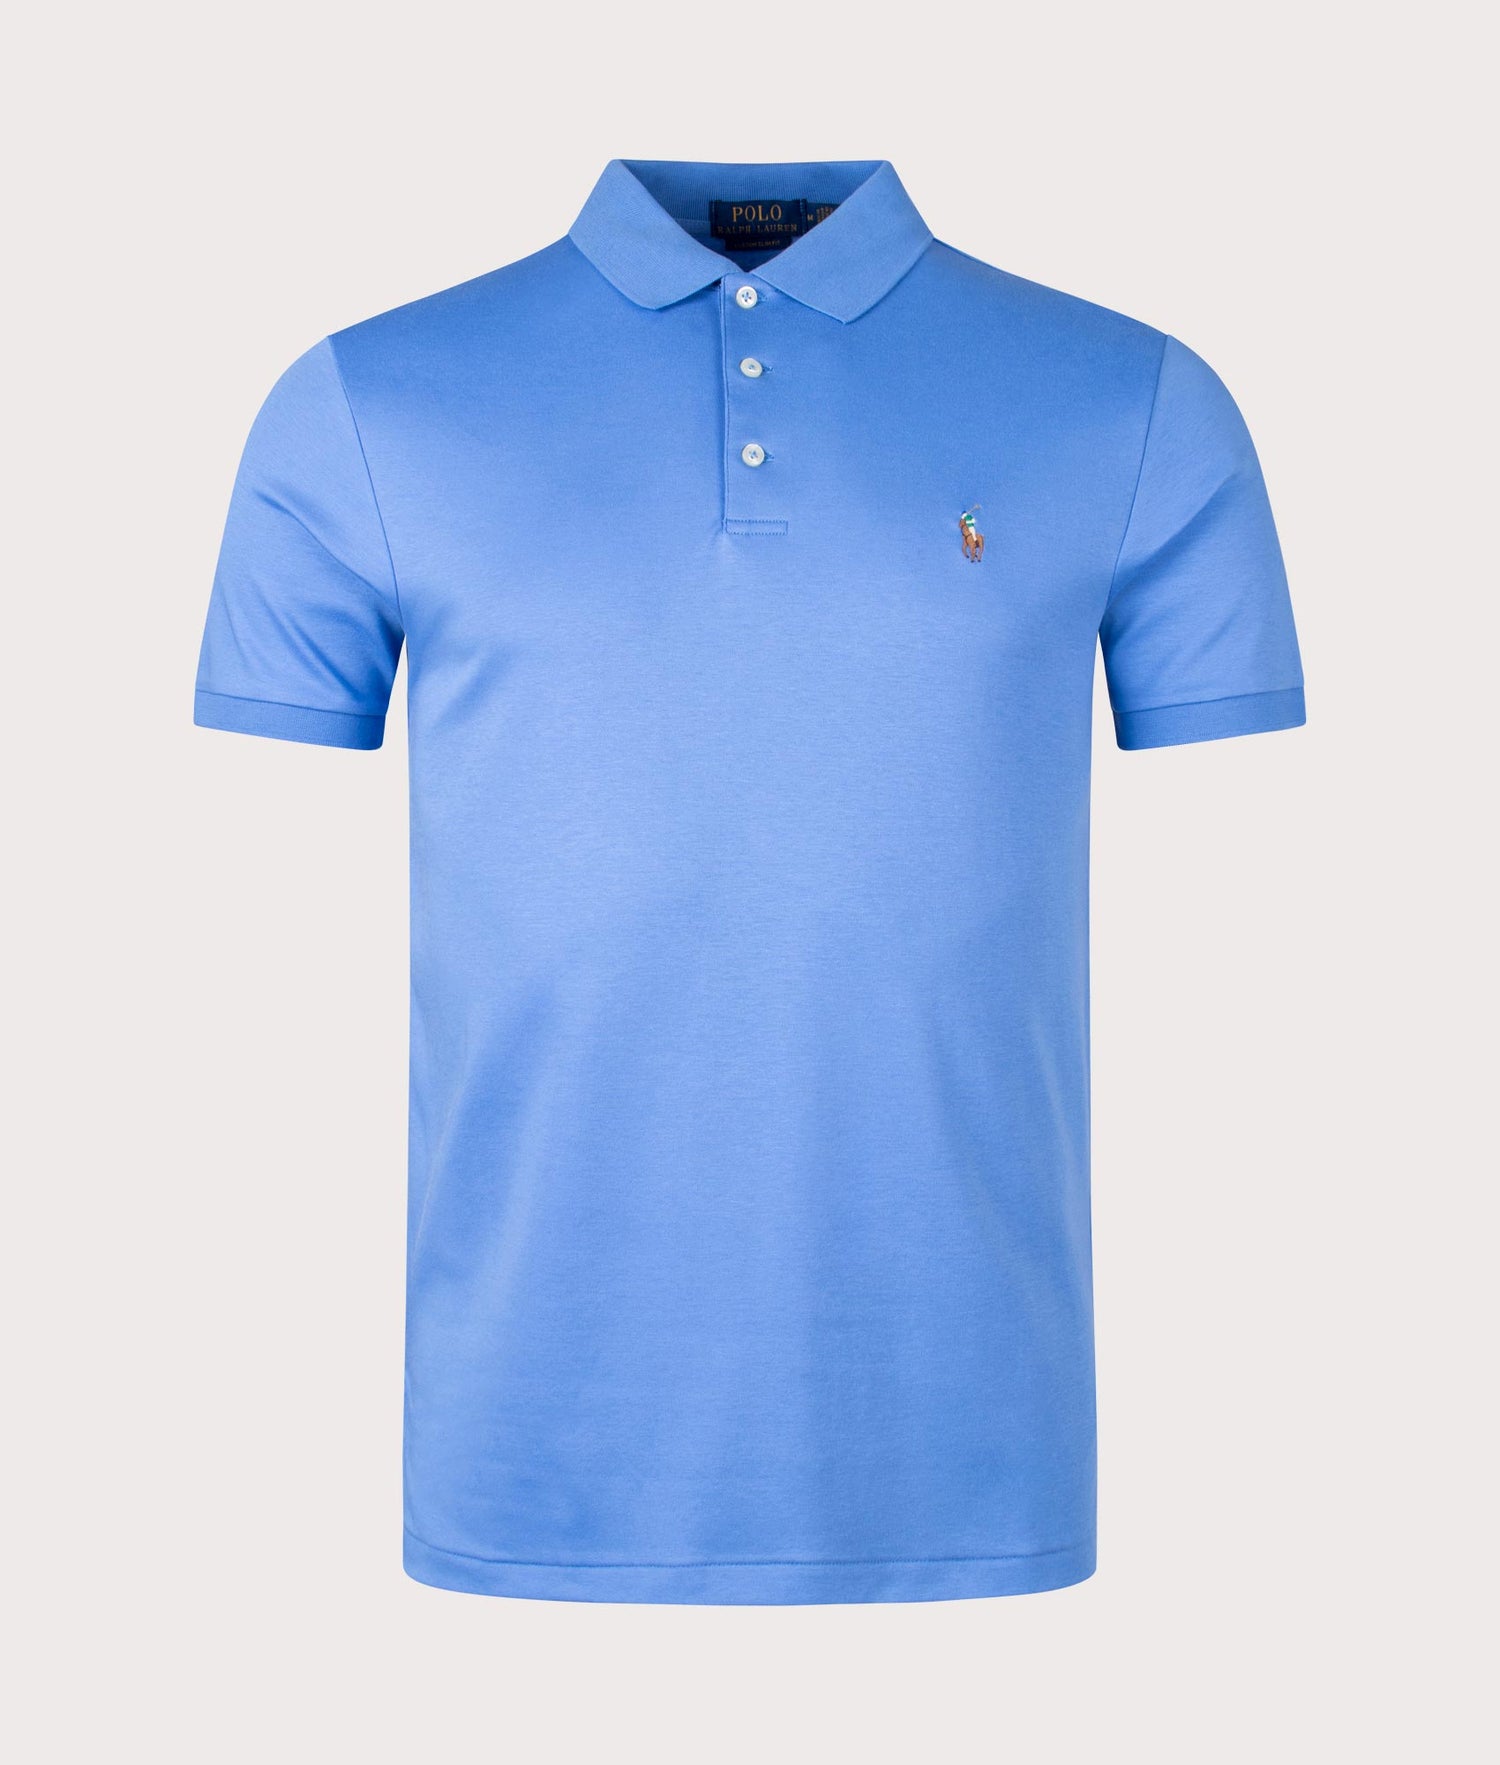 Polo Ralph Lauren Soft Cotton Polo Shirt-Sky Blue - Men